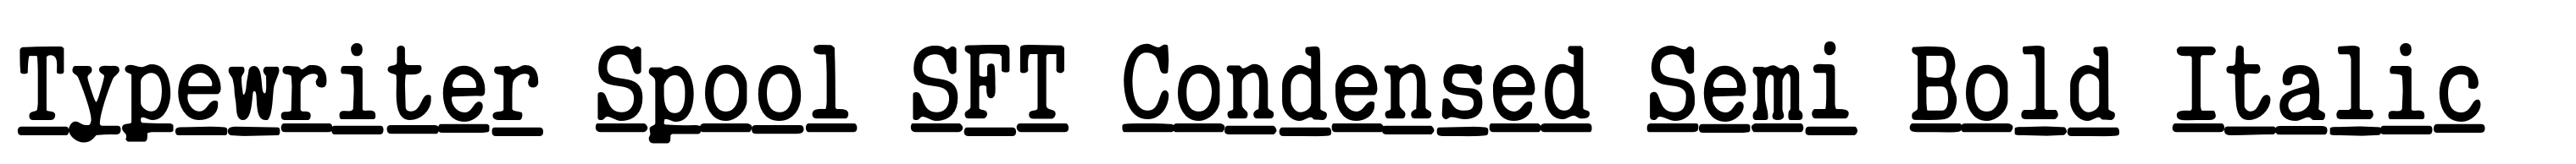 Typewriter Spool SFT Condensed Semi Bold Italic